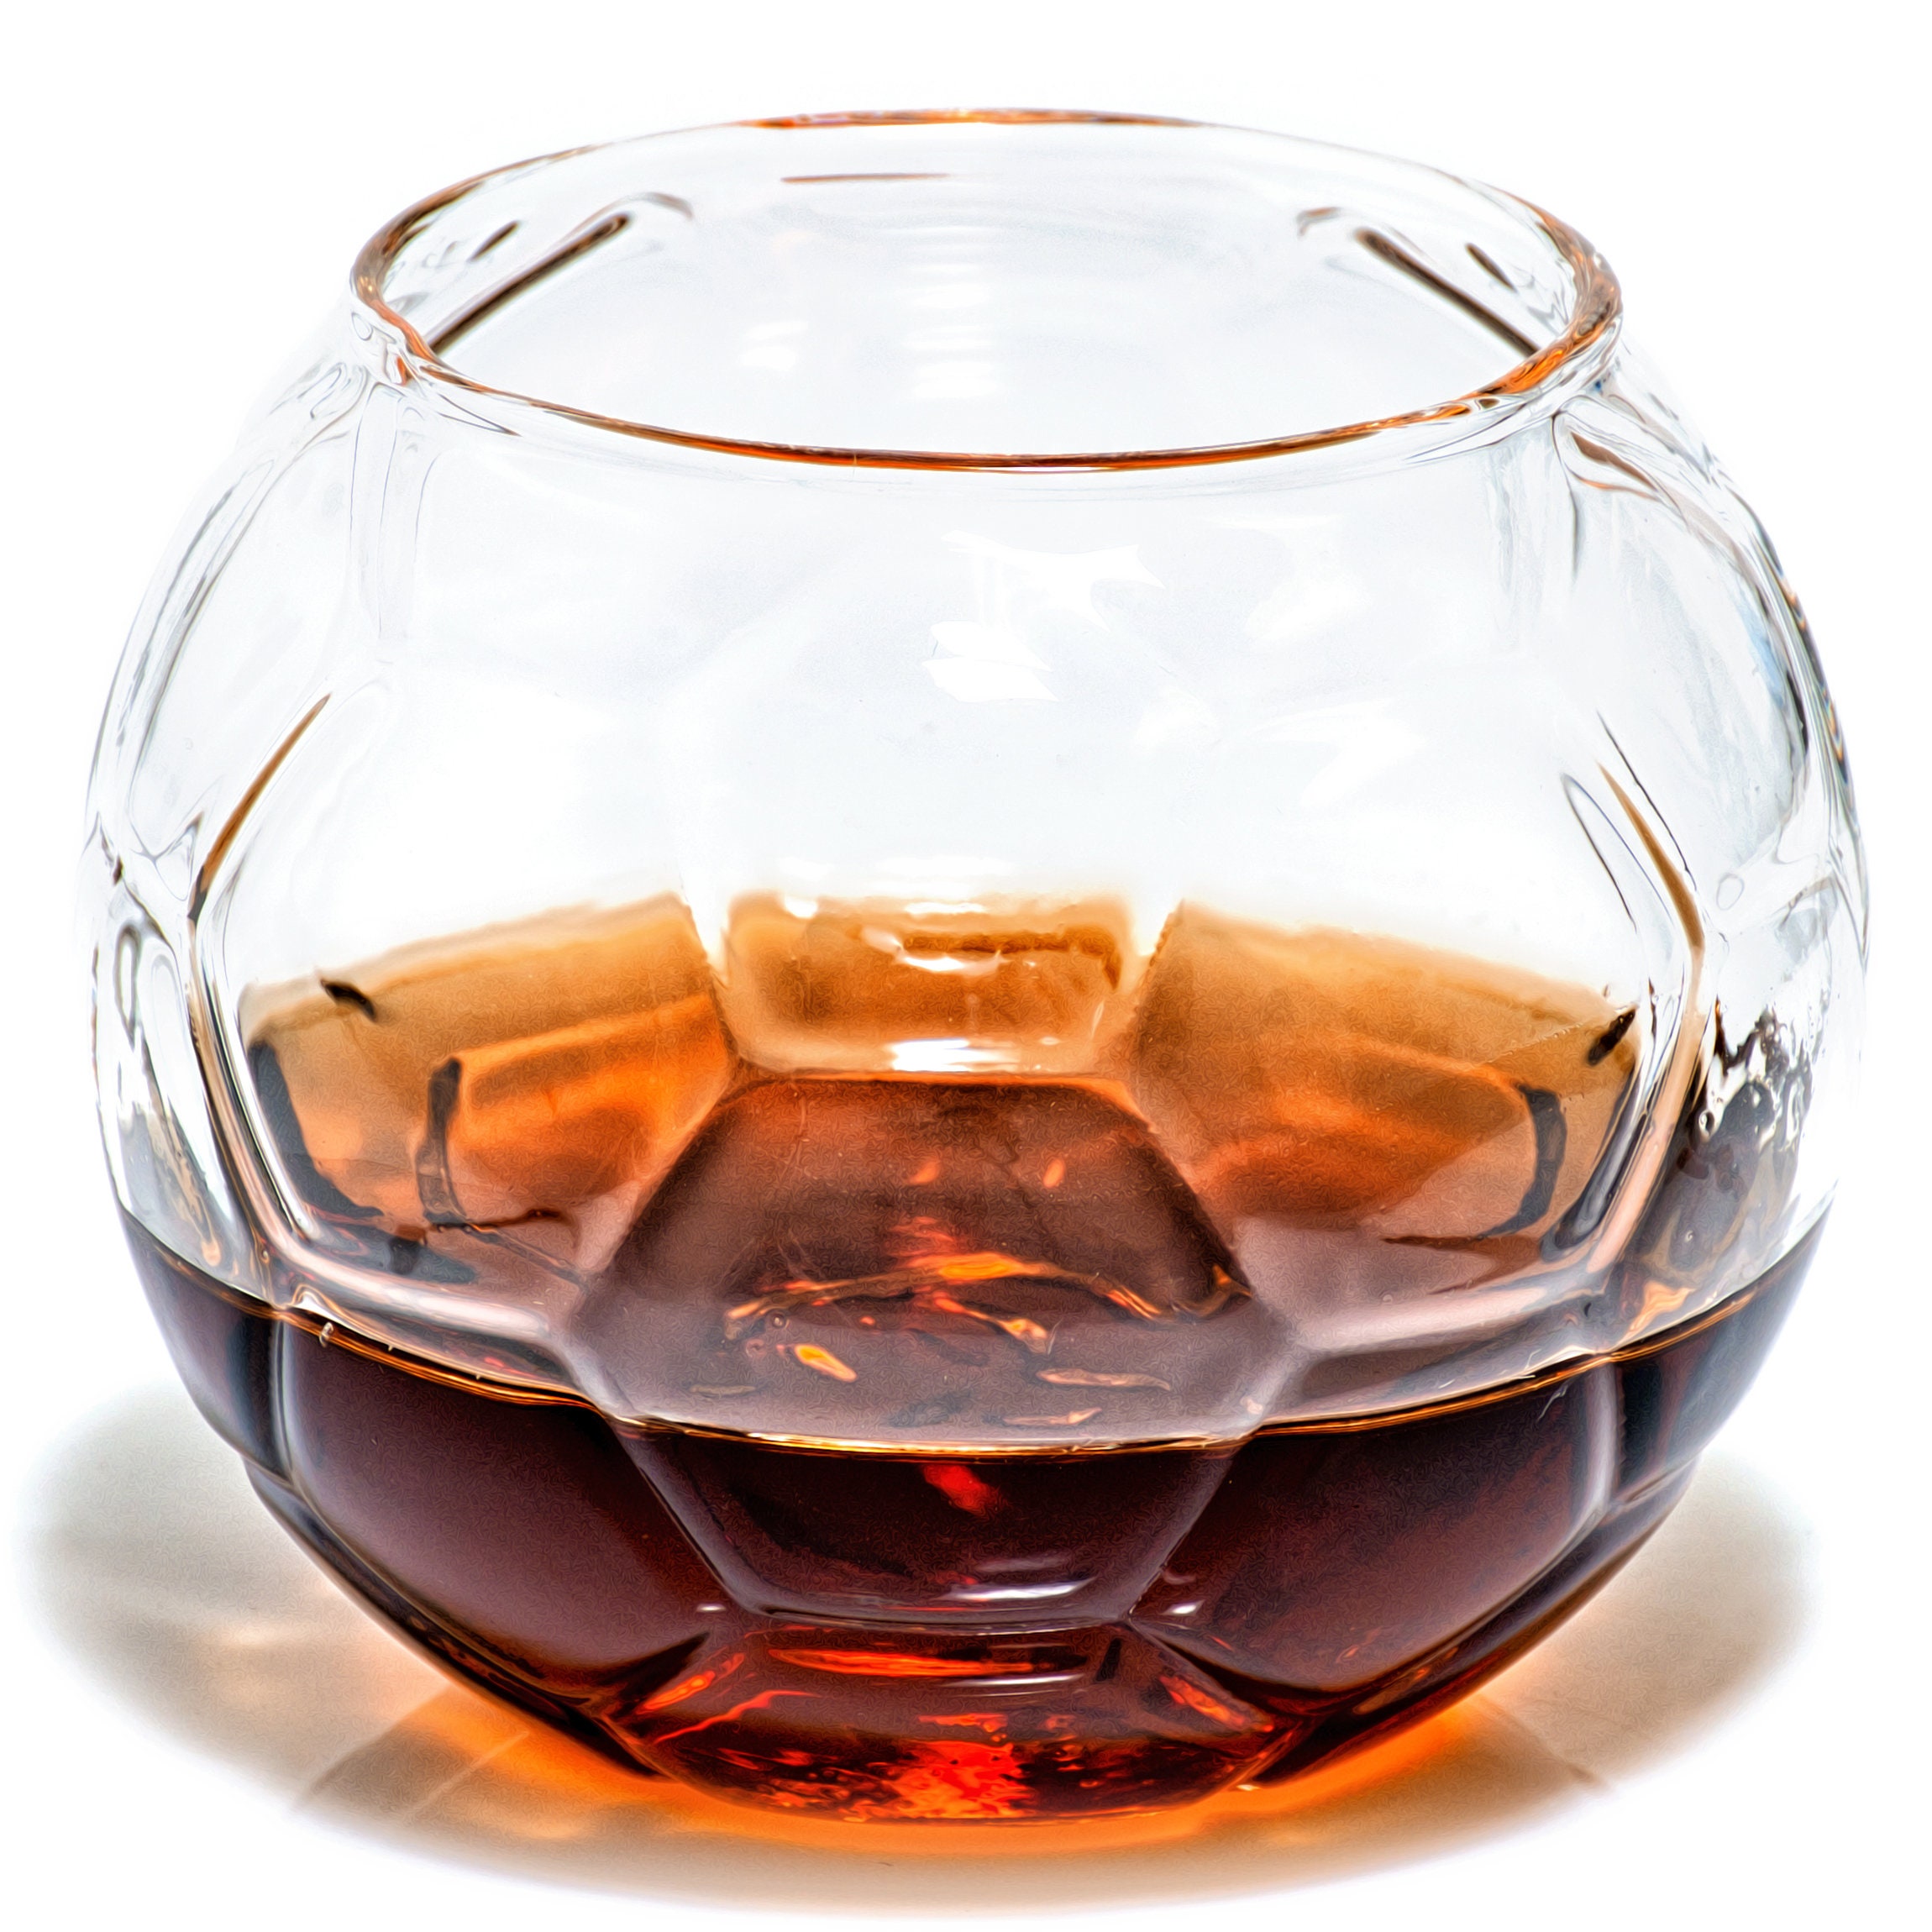 Monogrammed Whiskey Balls – The Whiskey Ball